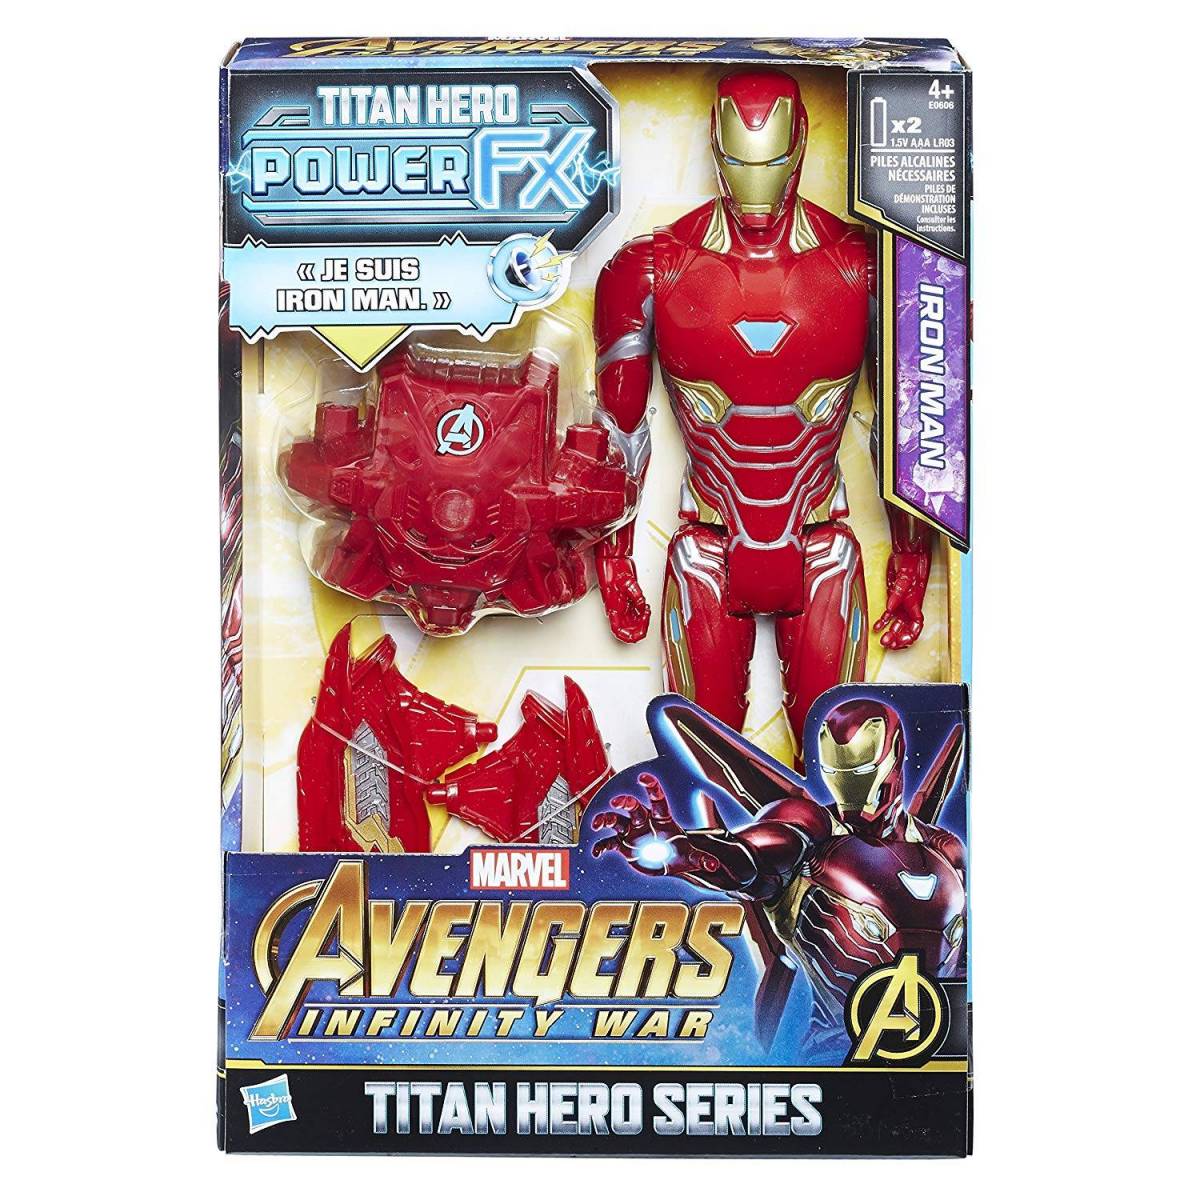 Marvel - Iron Man : Figurine articulée et parlante